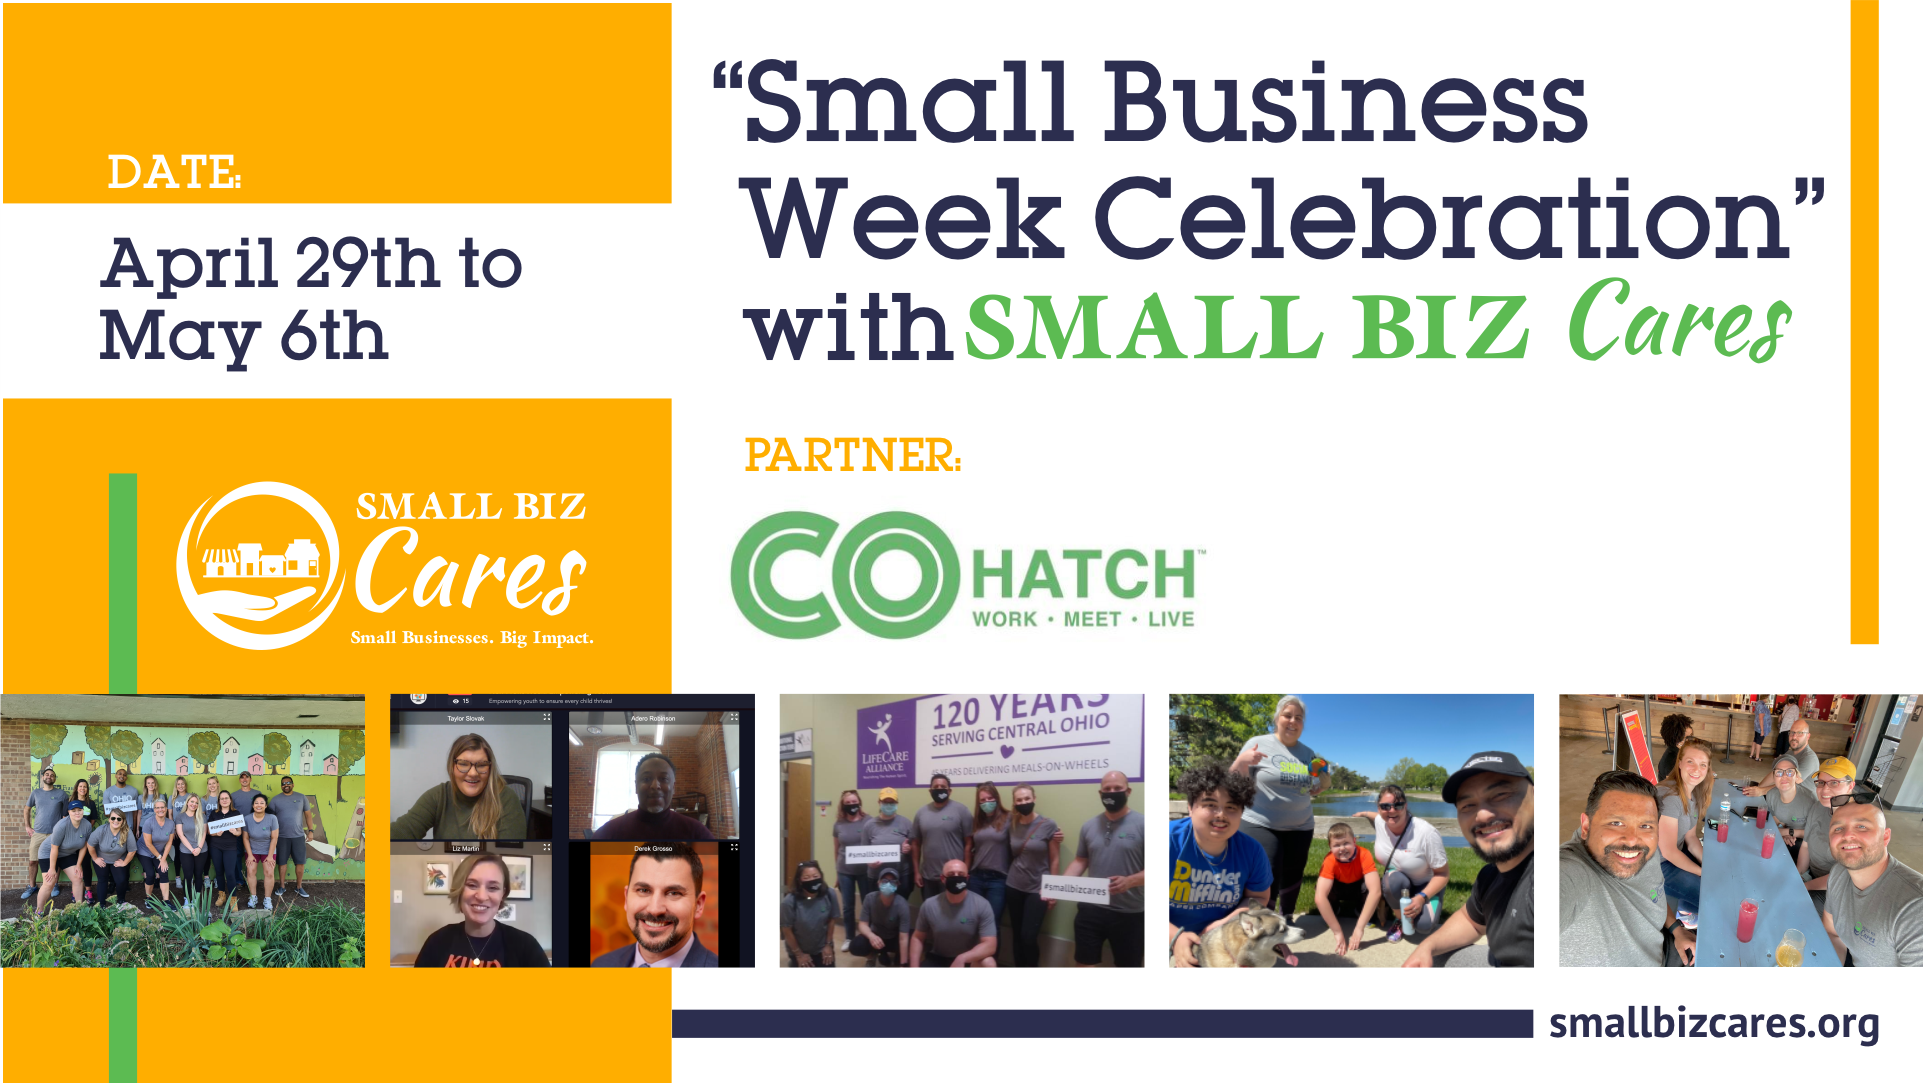 Small Business Week Celebration